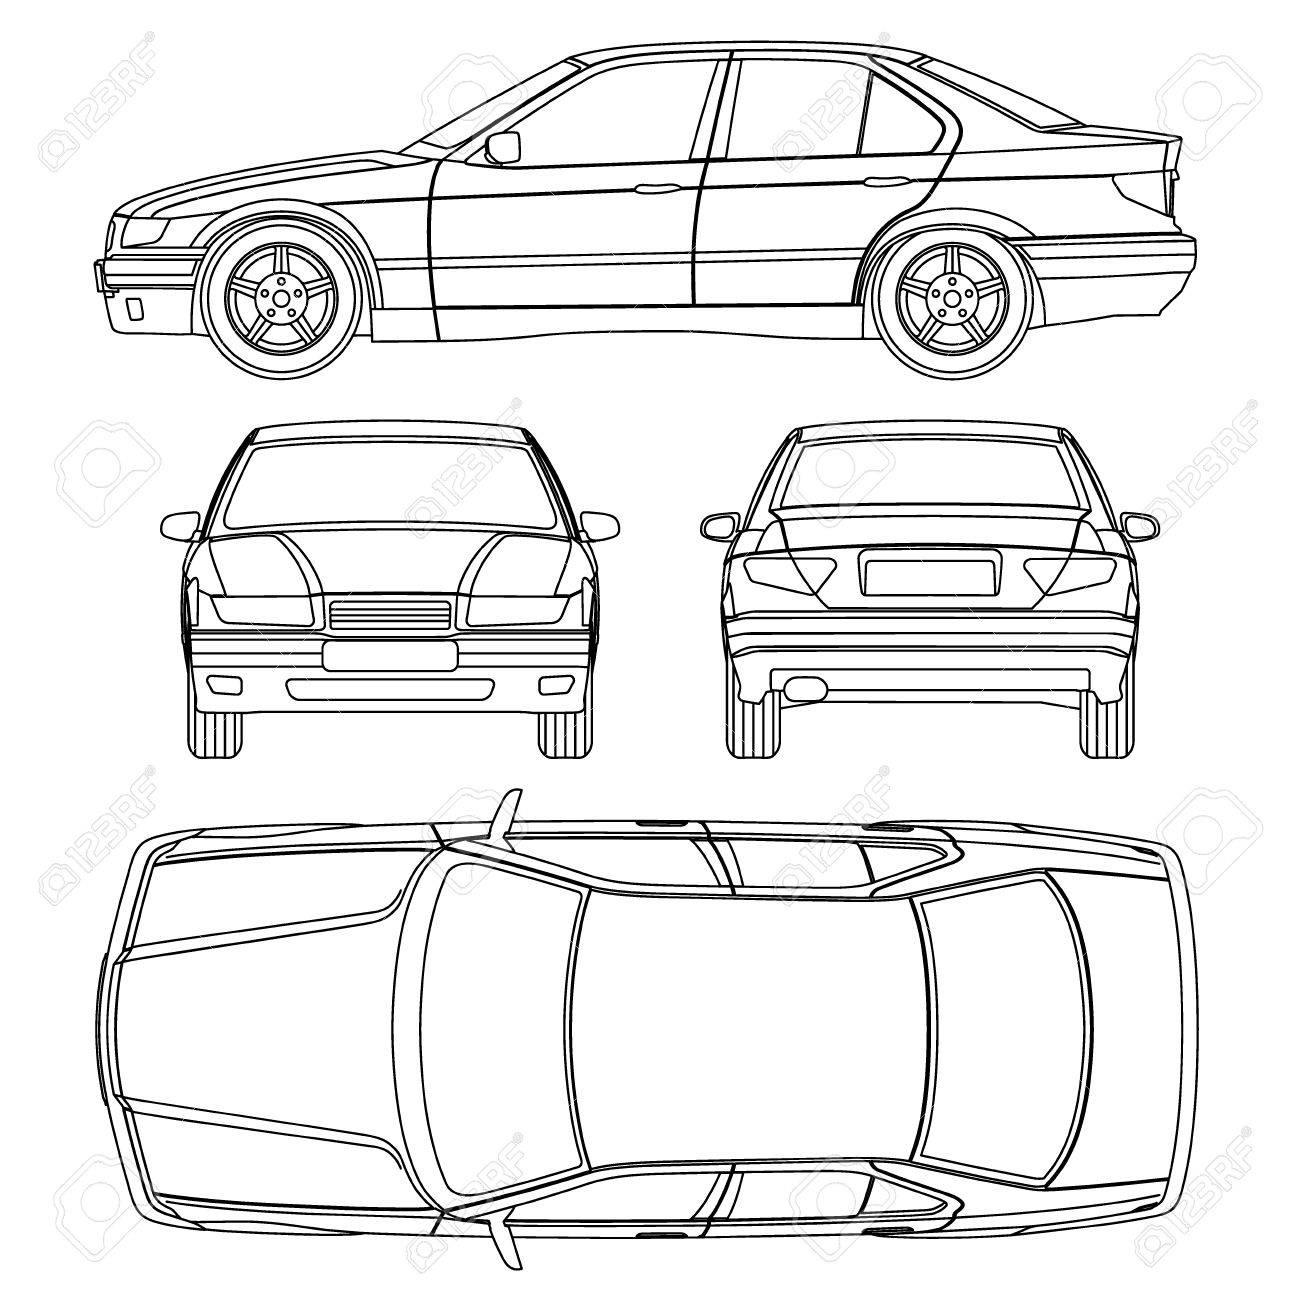 009 Template Ideas Car Line Draw Insurance Damage Condition Inside Car Damage Report Template